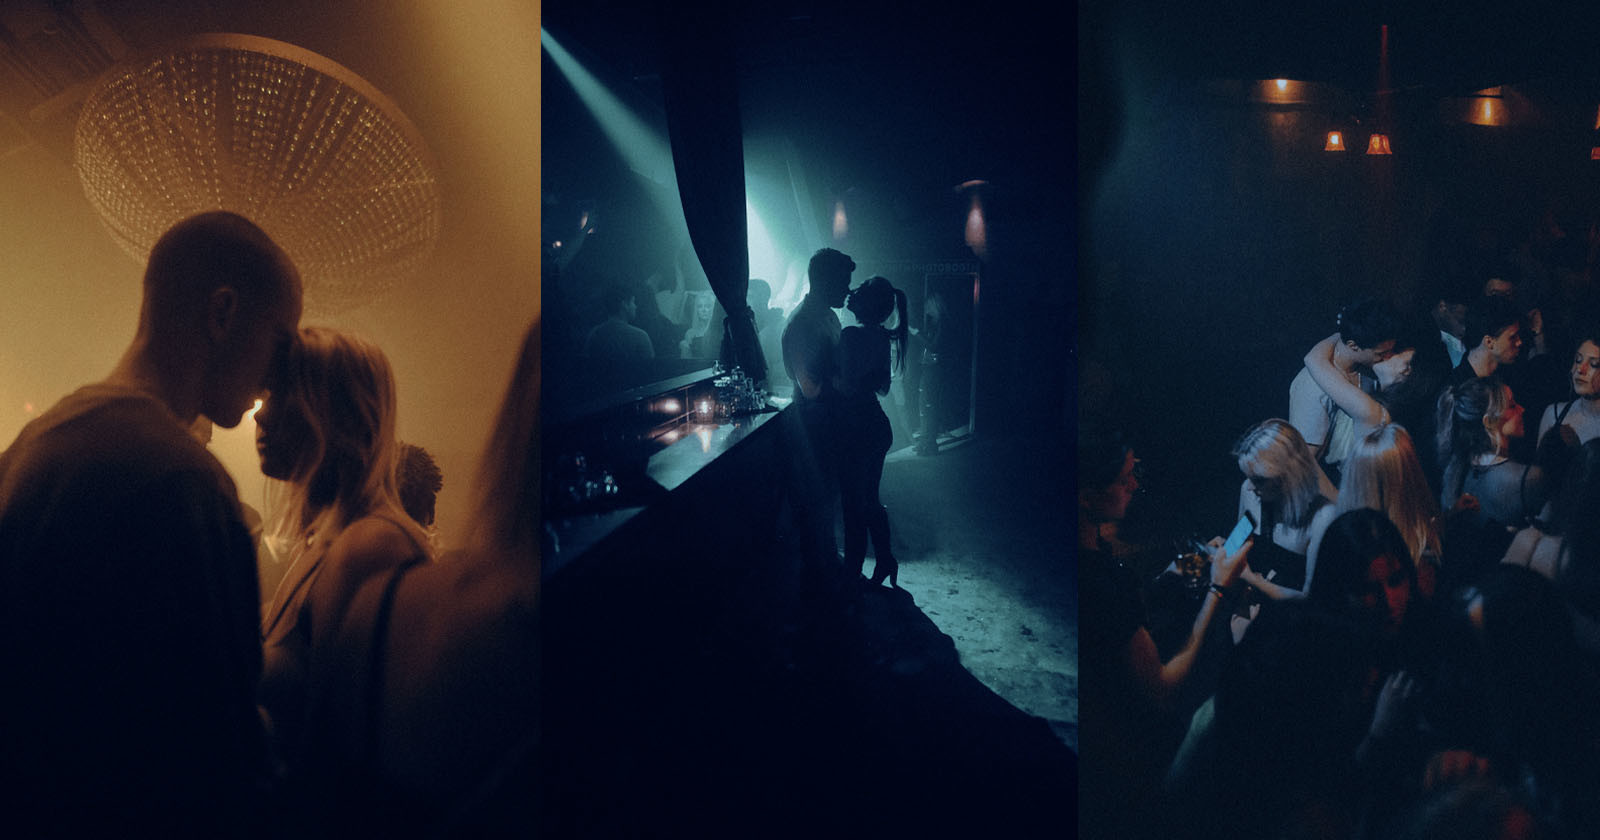 Evocative Nightclub Photos Capture Moments of Public Intimacy